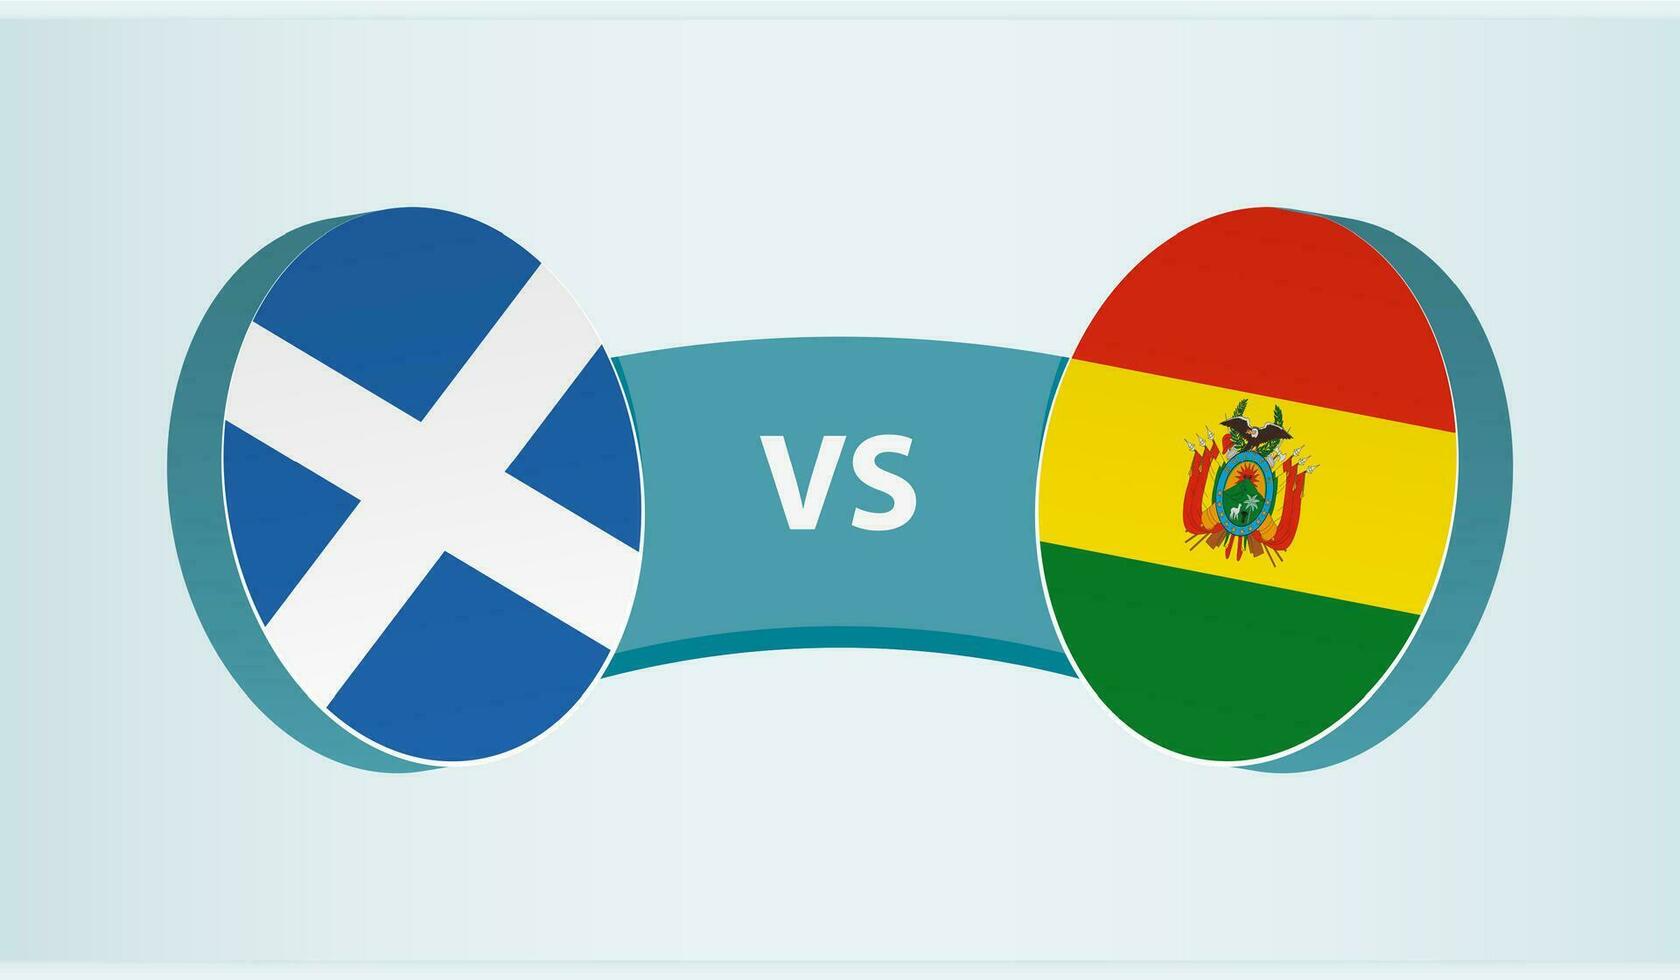 Scotland versus Bolivia, team sports competition concept. vector